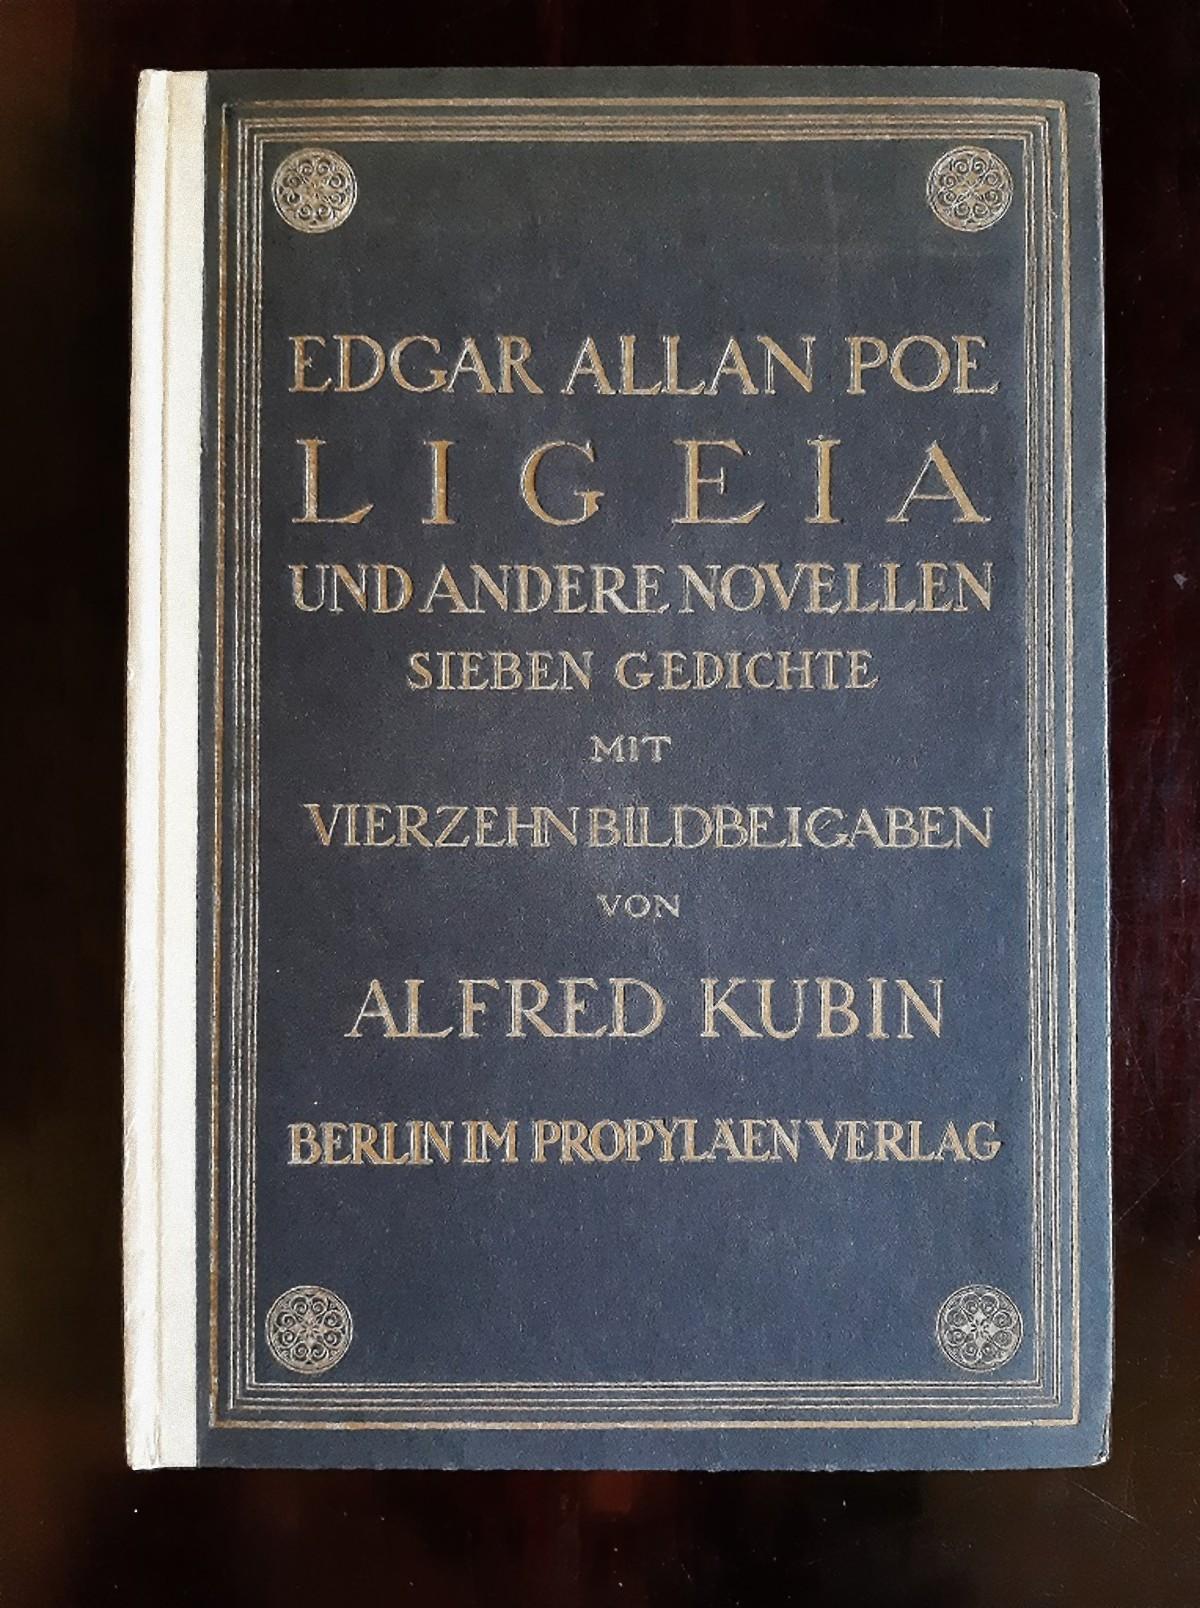 Ligeia und Andere Novellen - Rare Book Illustrated by Alfred Kubin - 1920 - Symbolist Art by Alfred Leopold Isidor Kubin